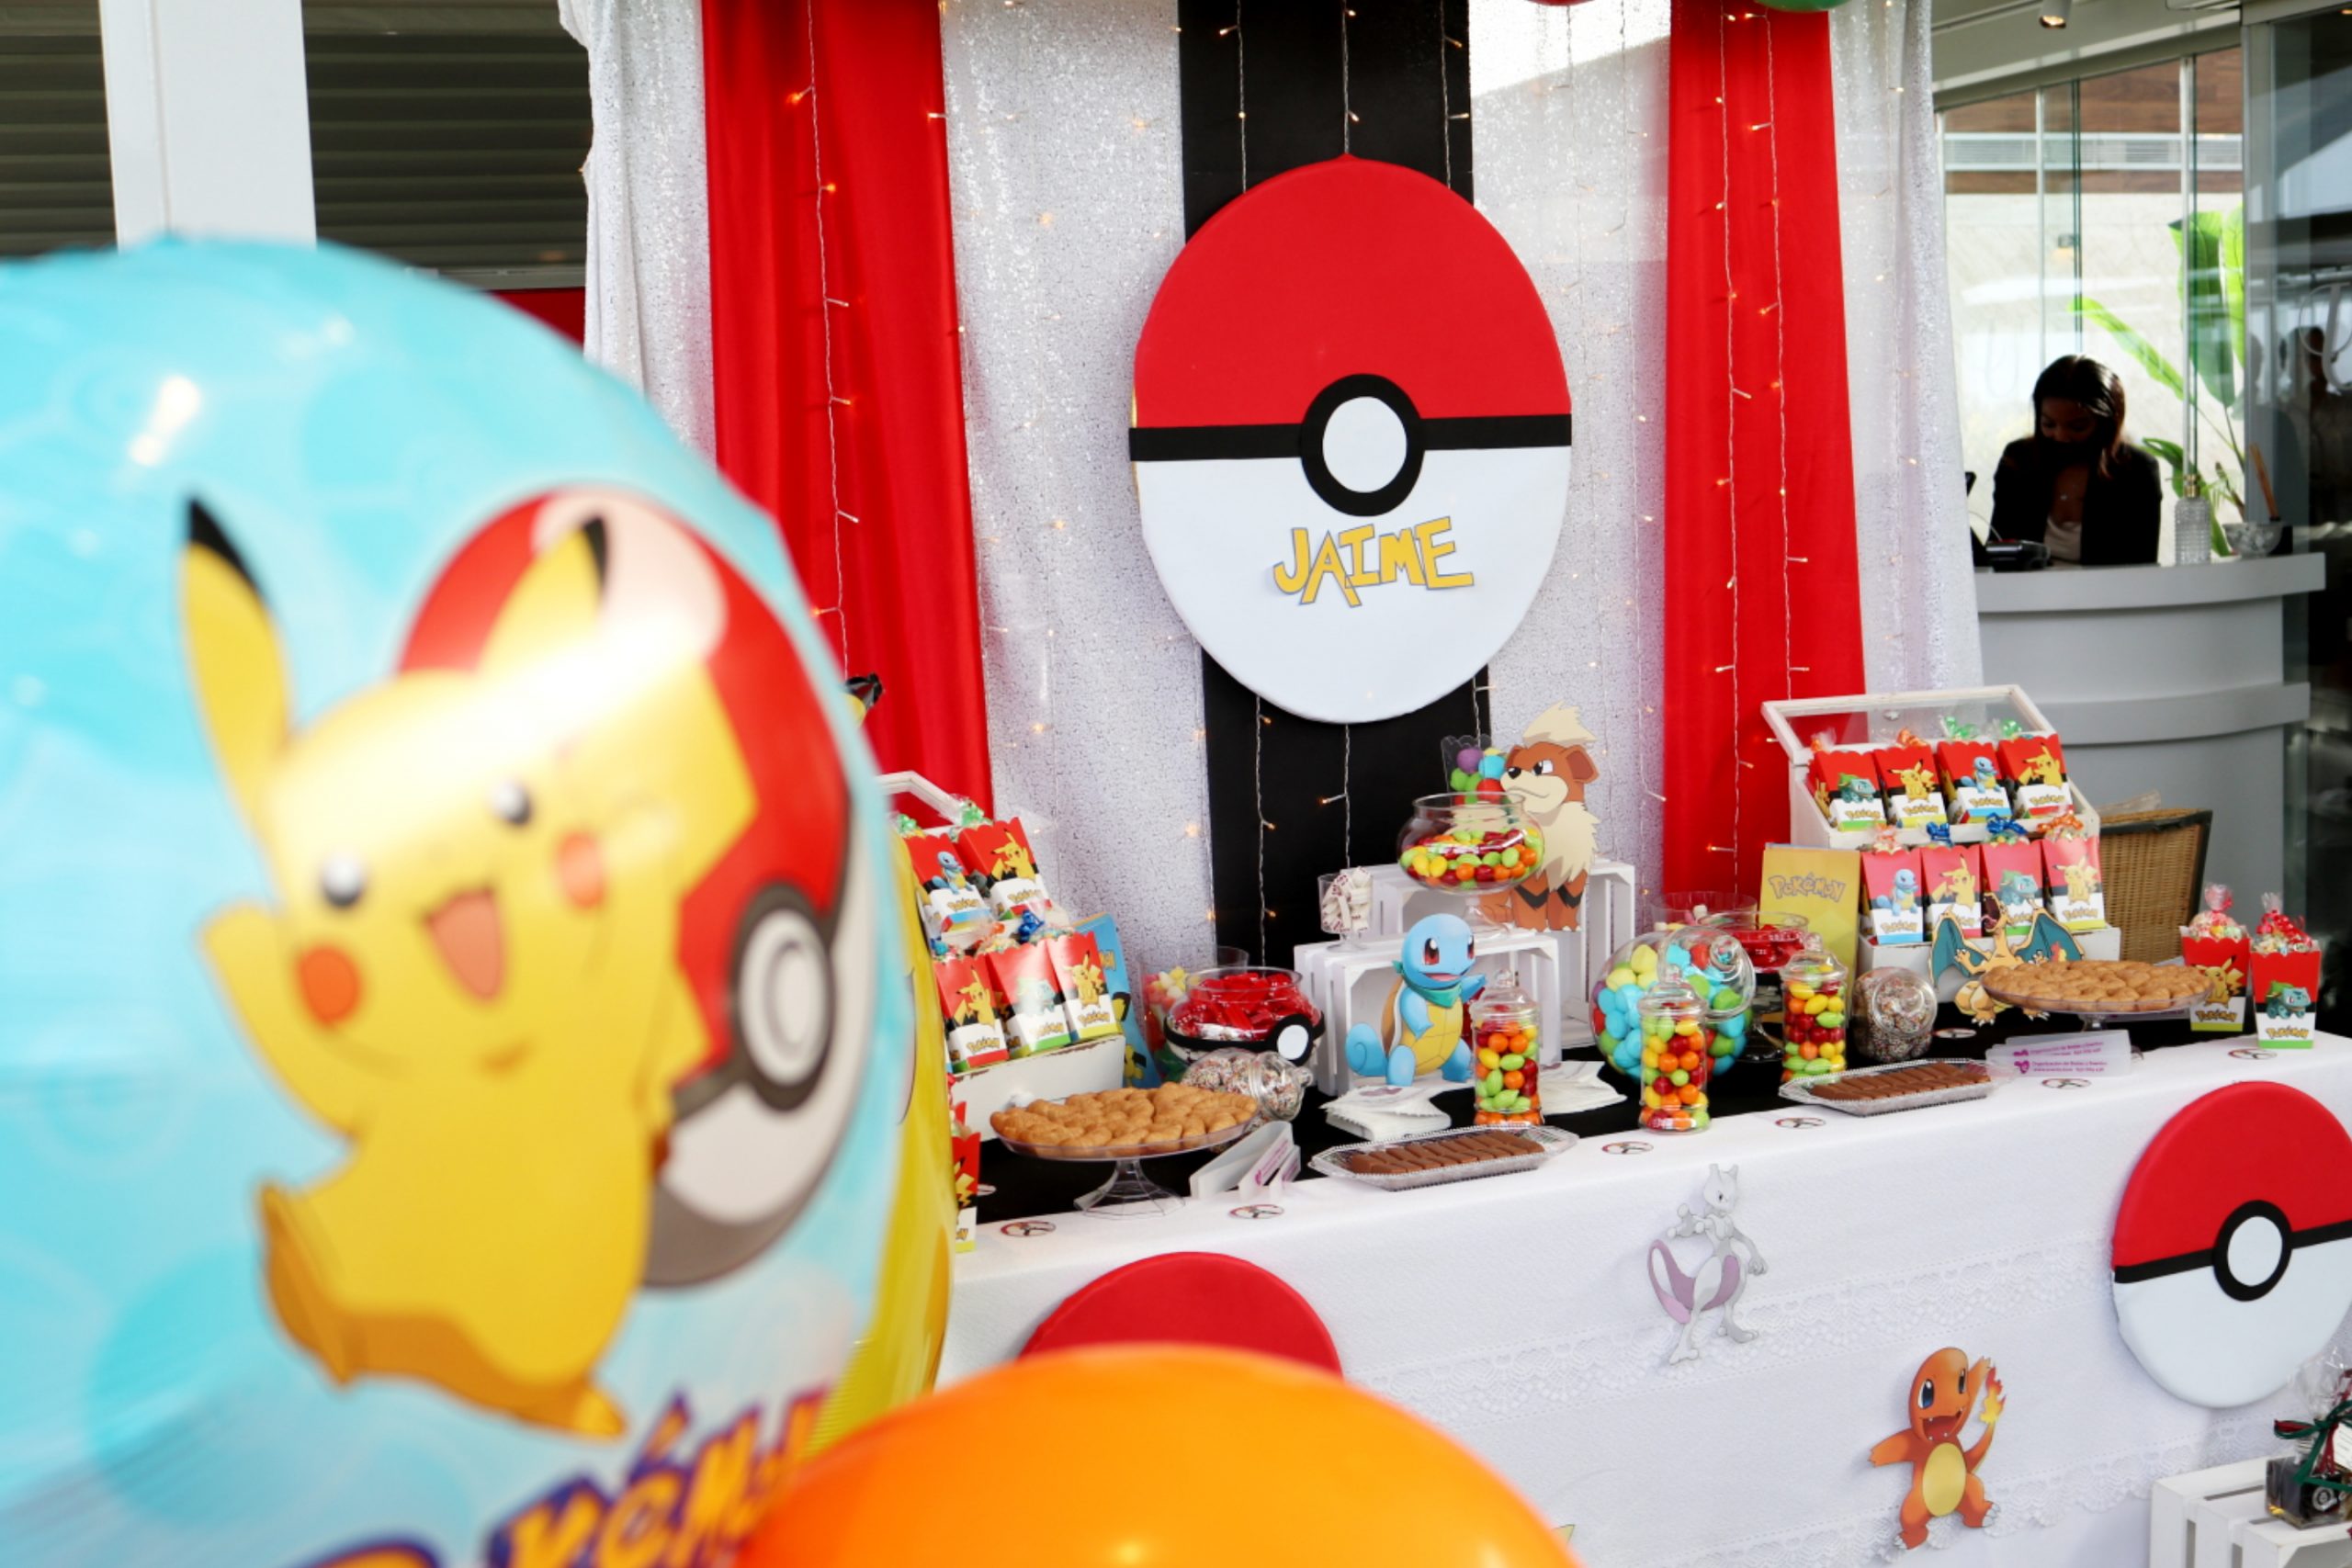 eventolove-fiestapokemon-pokemon-comuniones-cumpleaños-fiestatematizada-party-fiestatematica